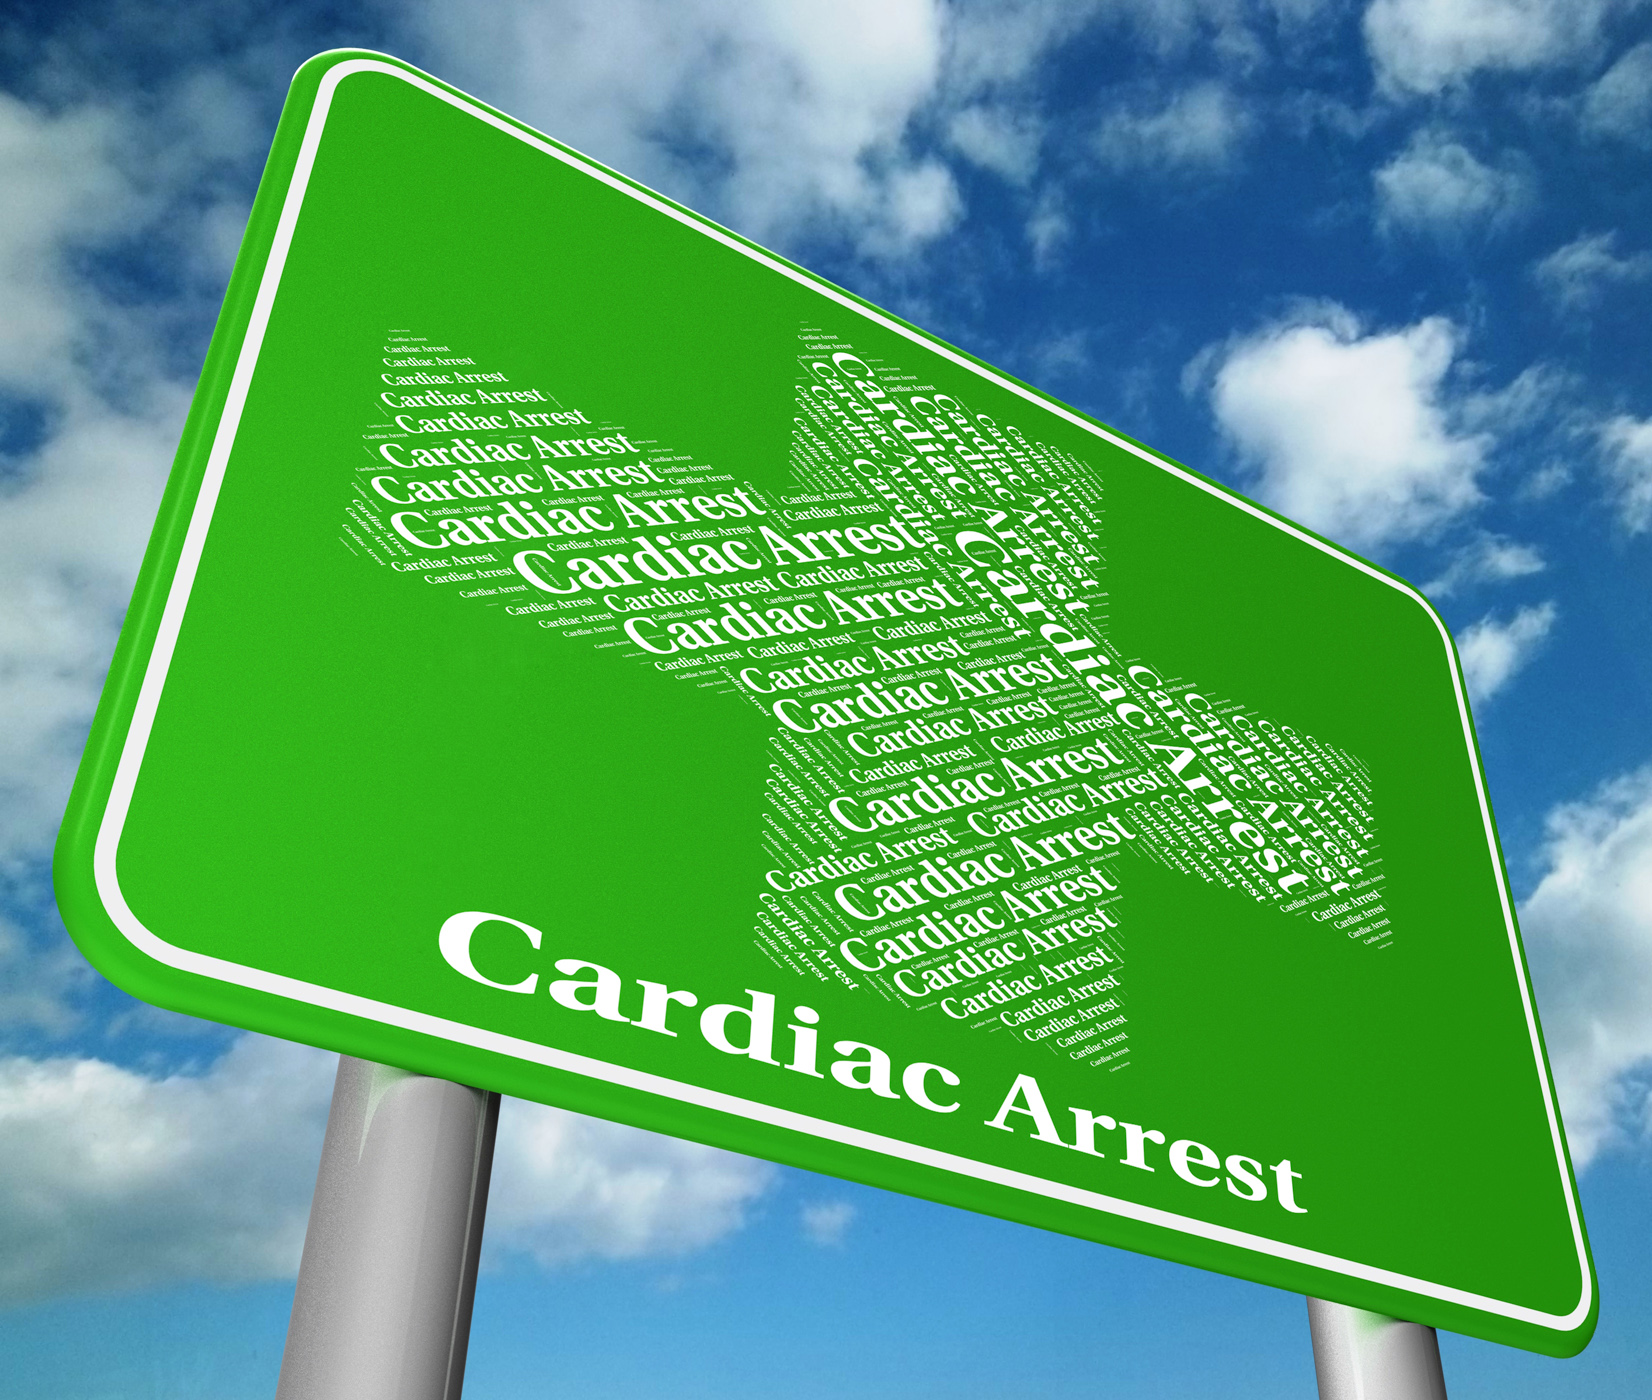 Cardiac arrest shows congestive heart failure and complaint photo